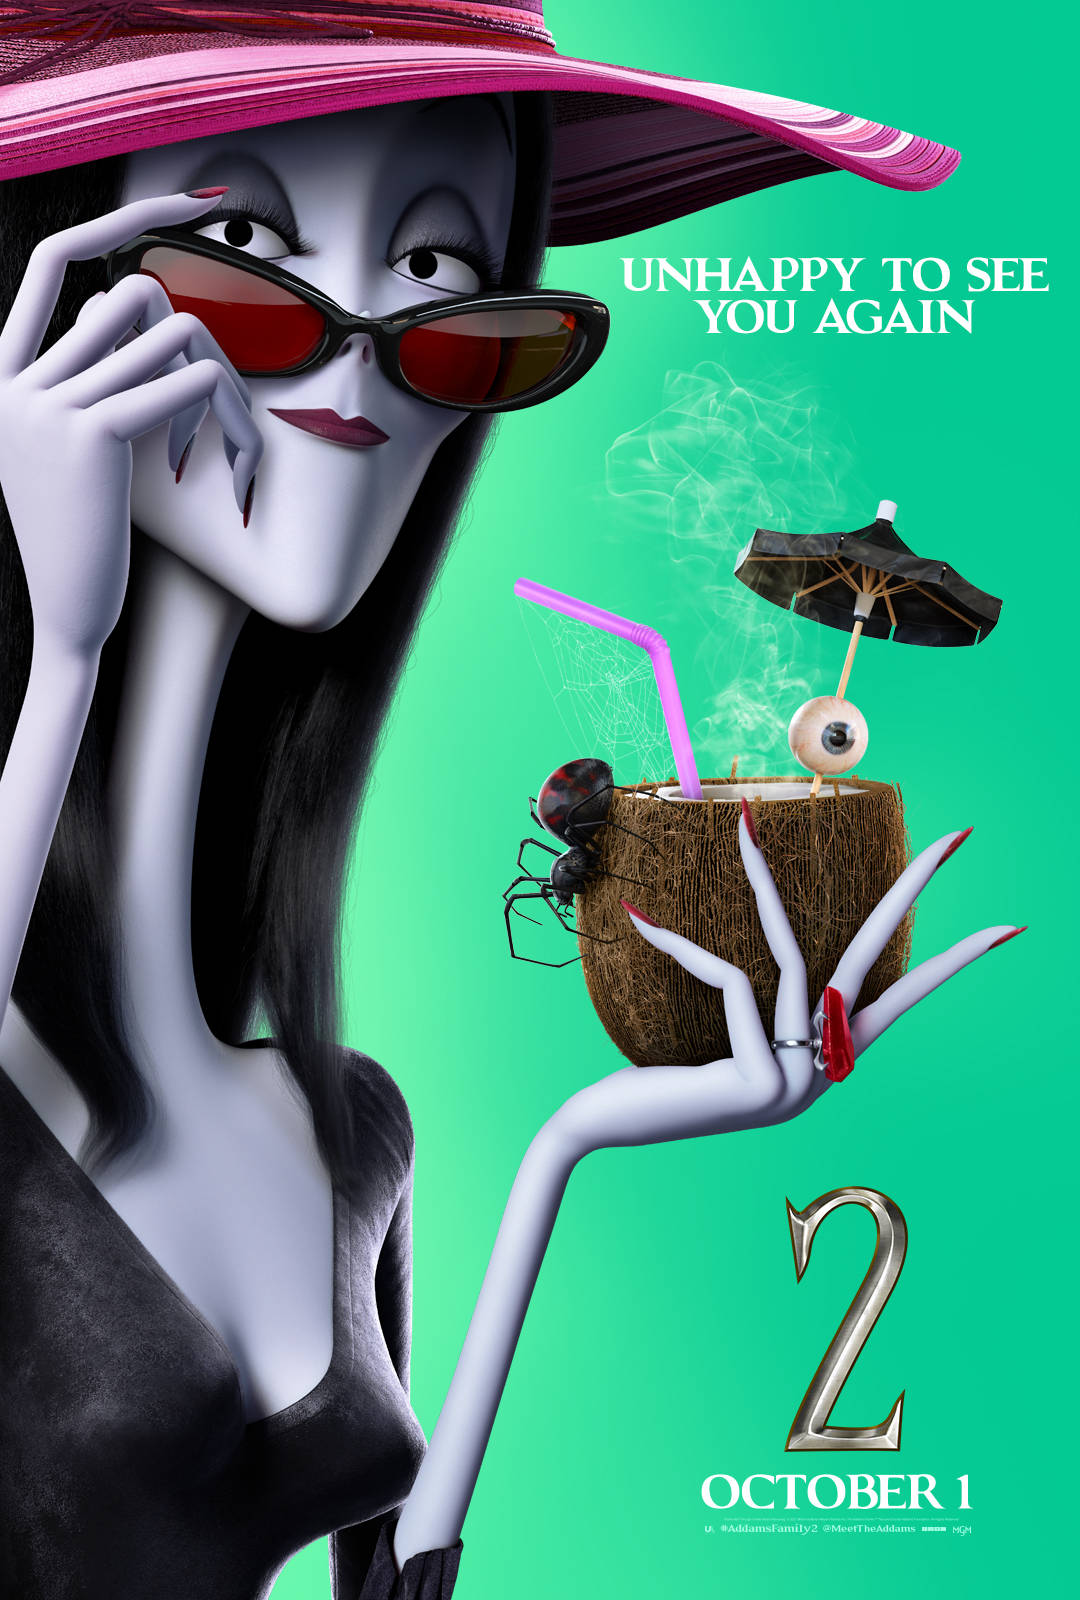 Morticia Poster The Addams Family 2 Wallpaper